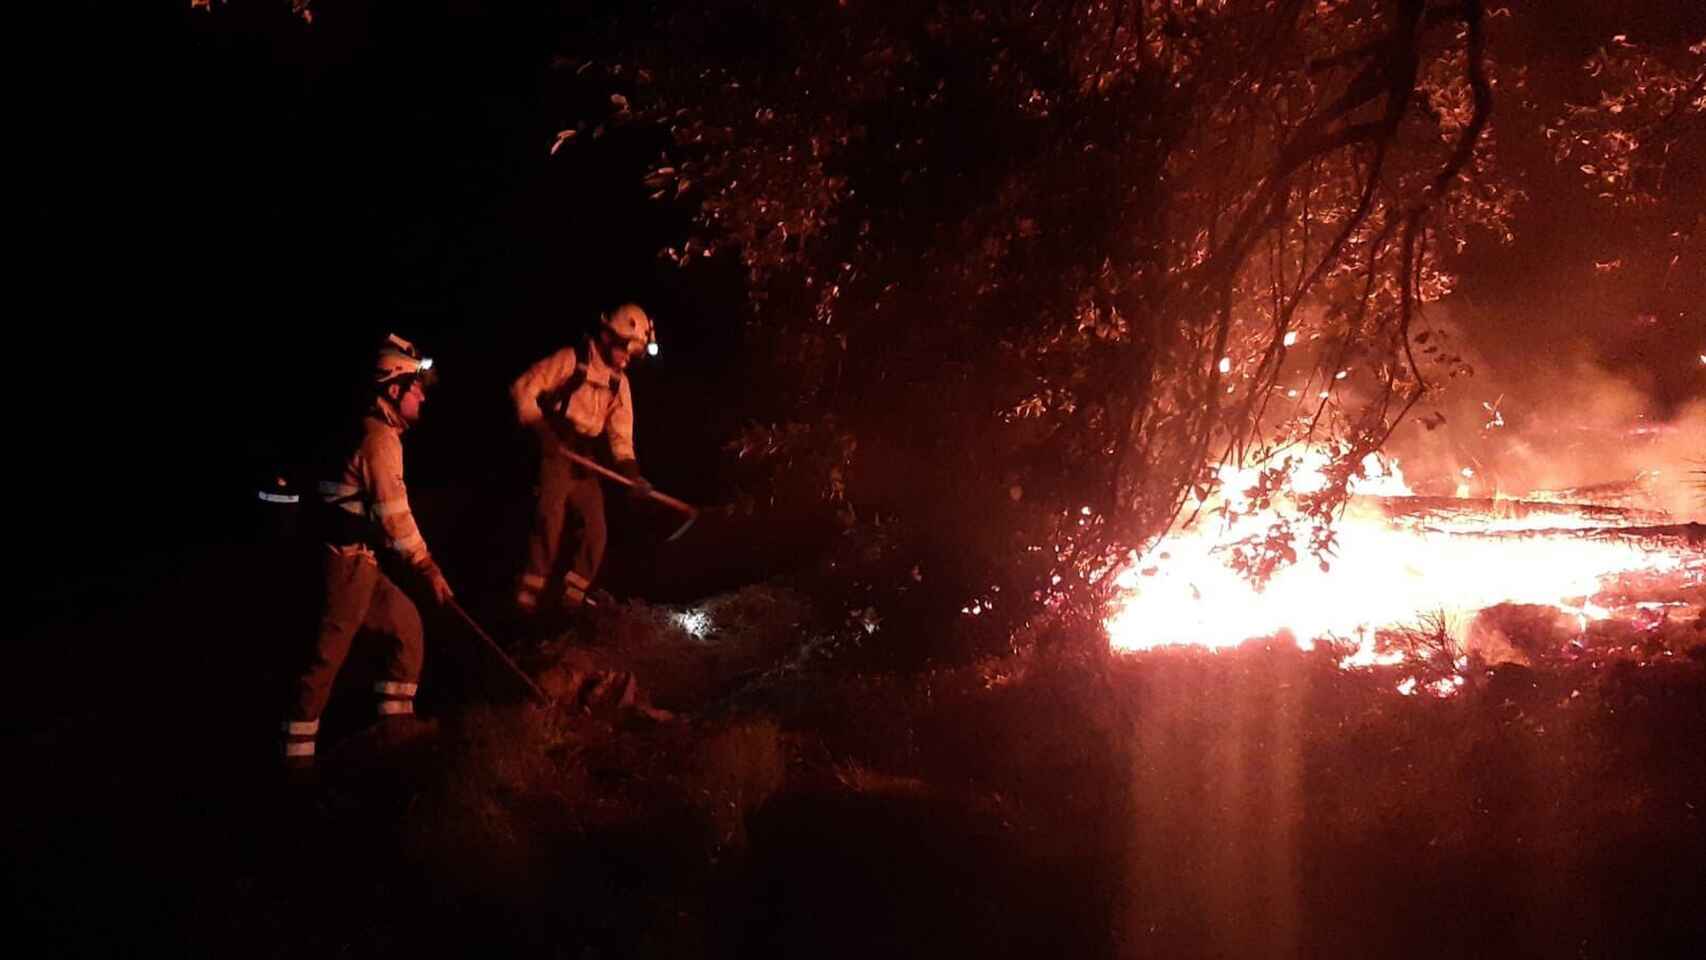 El incendio de Sierra Bermeja, en una imagen.